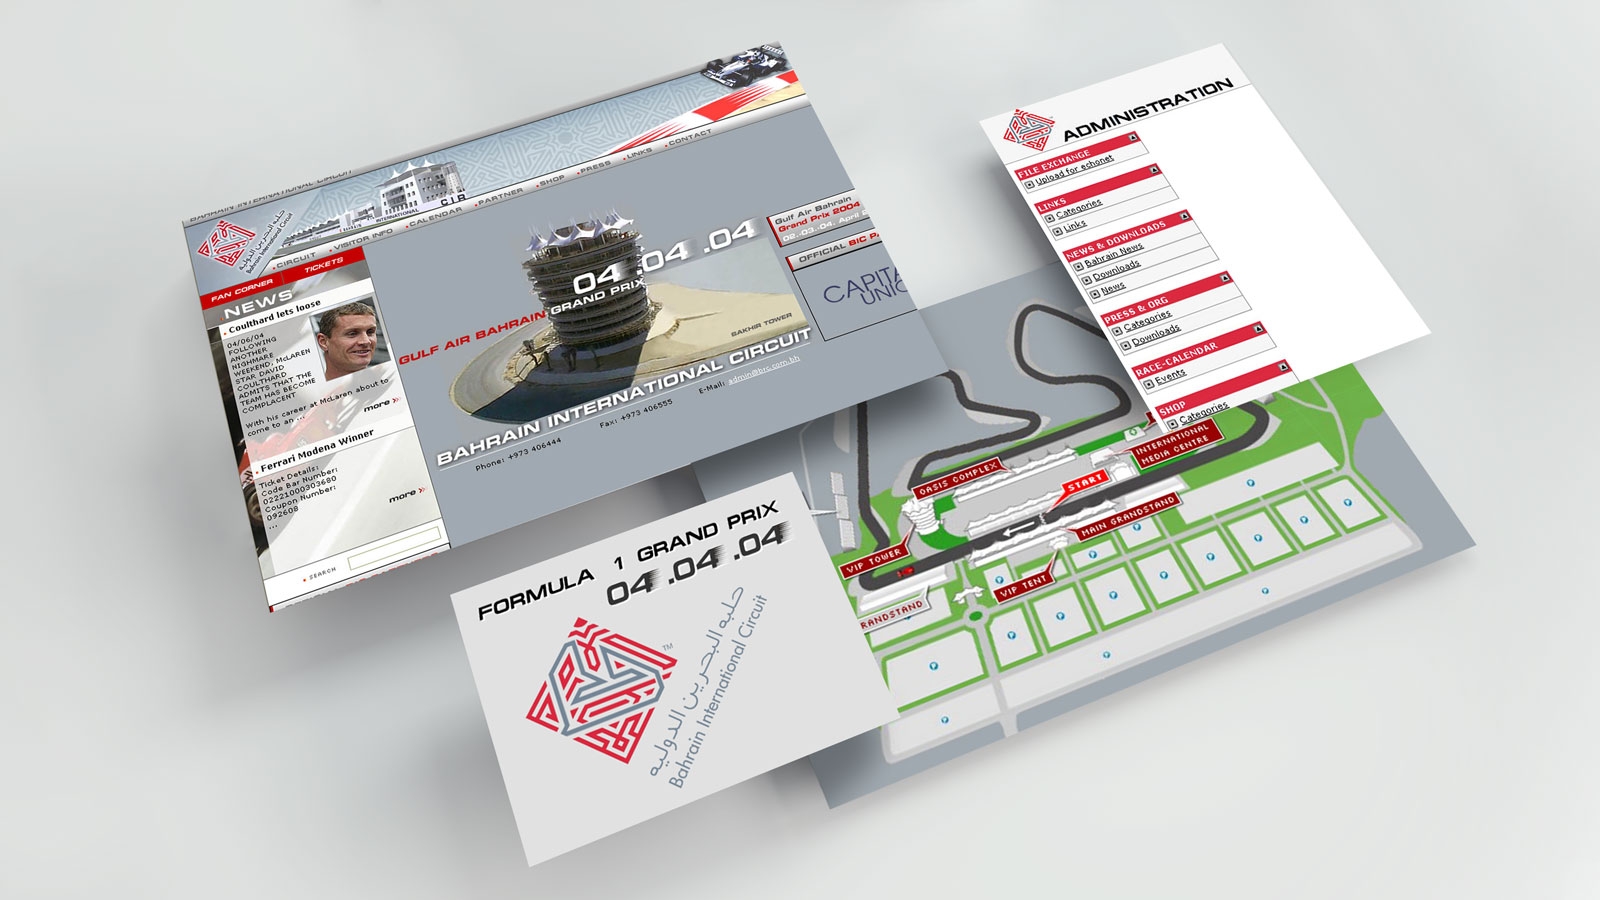 Bahrain Formula 1 Grand Prix | 2003 (Floating Screens) © echonet communication